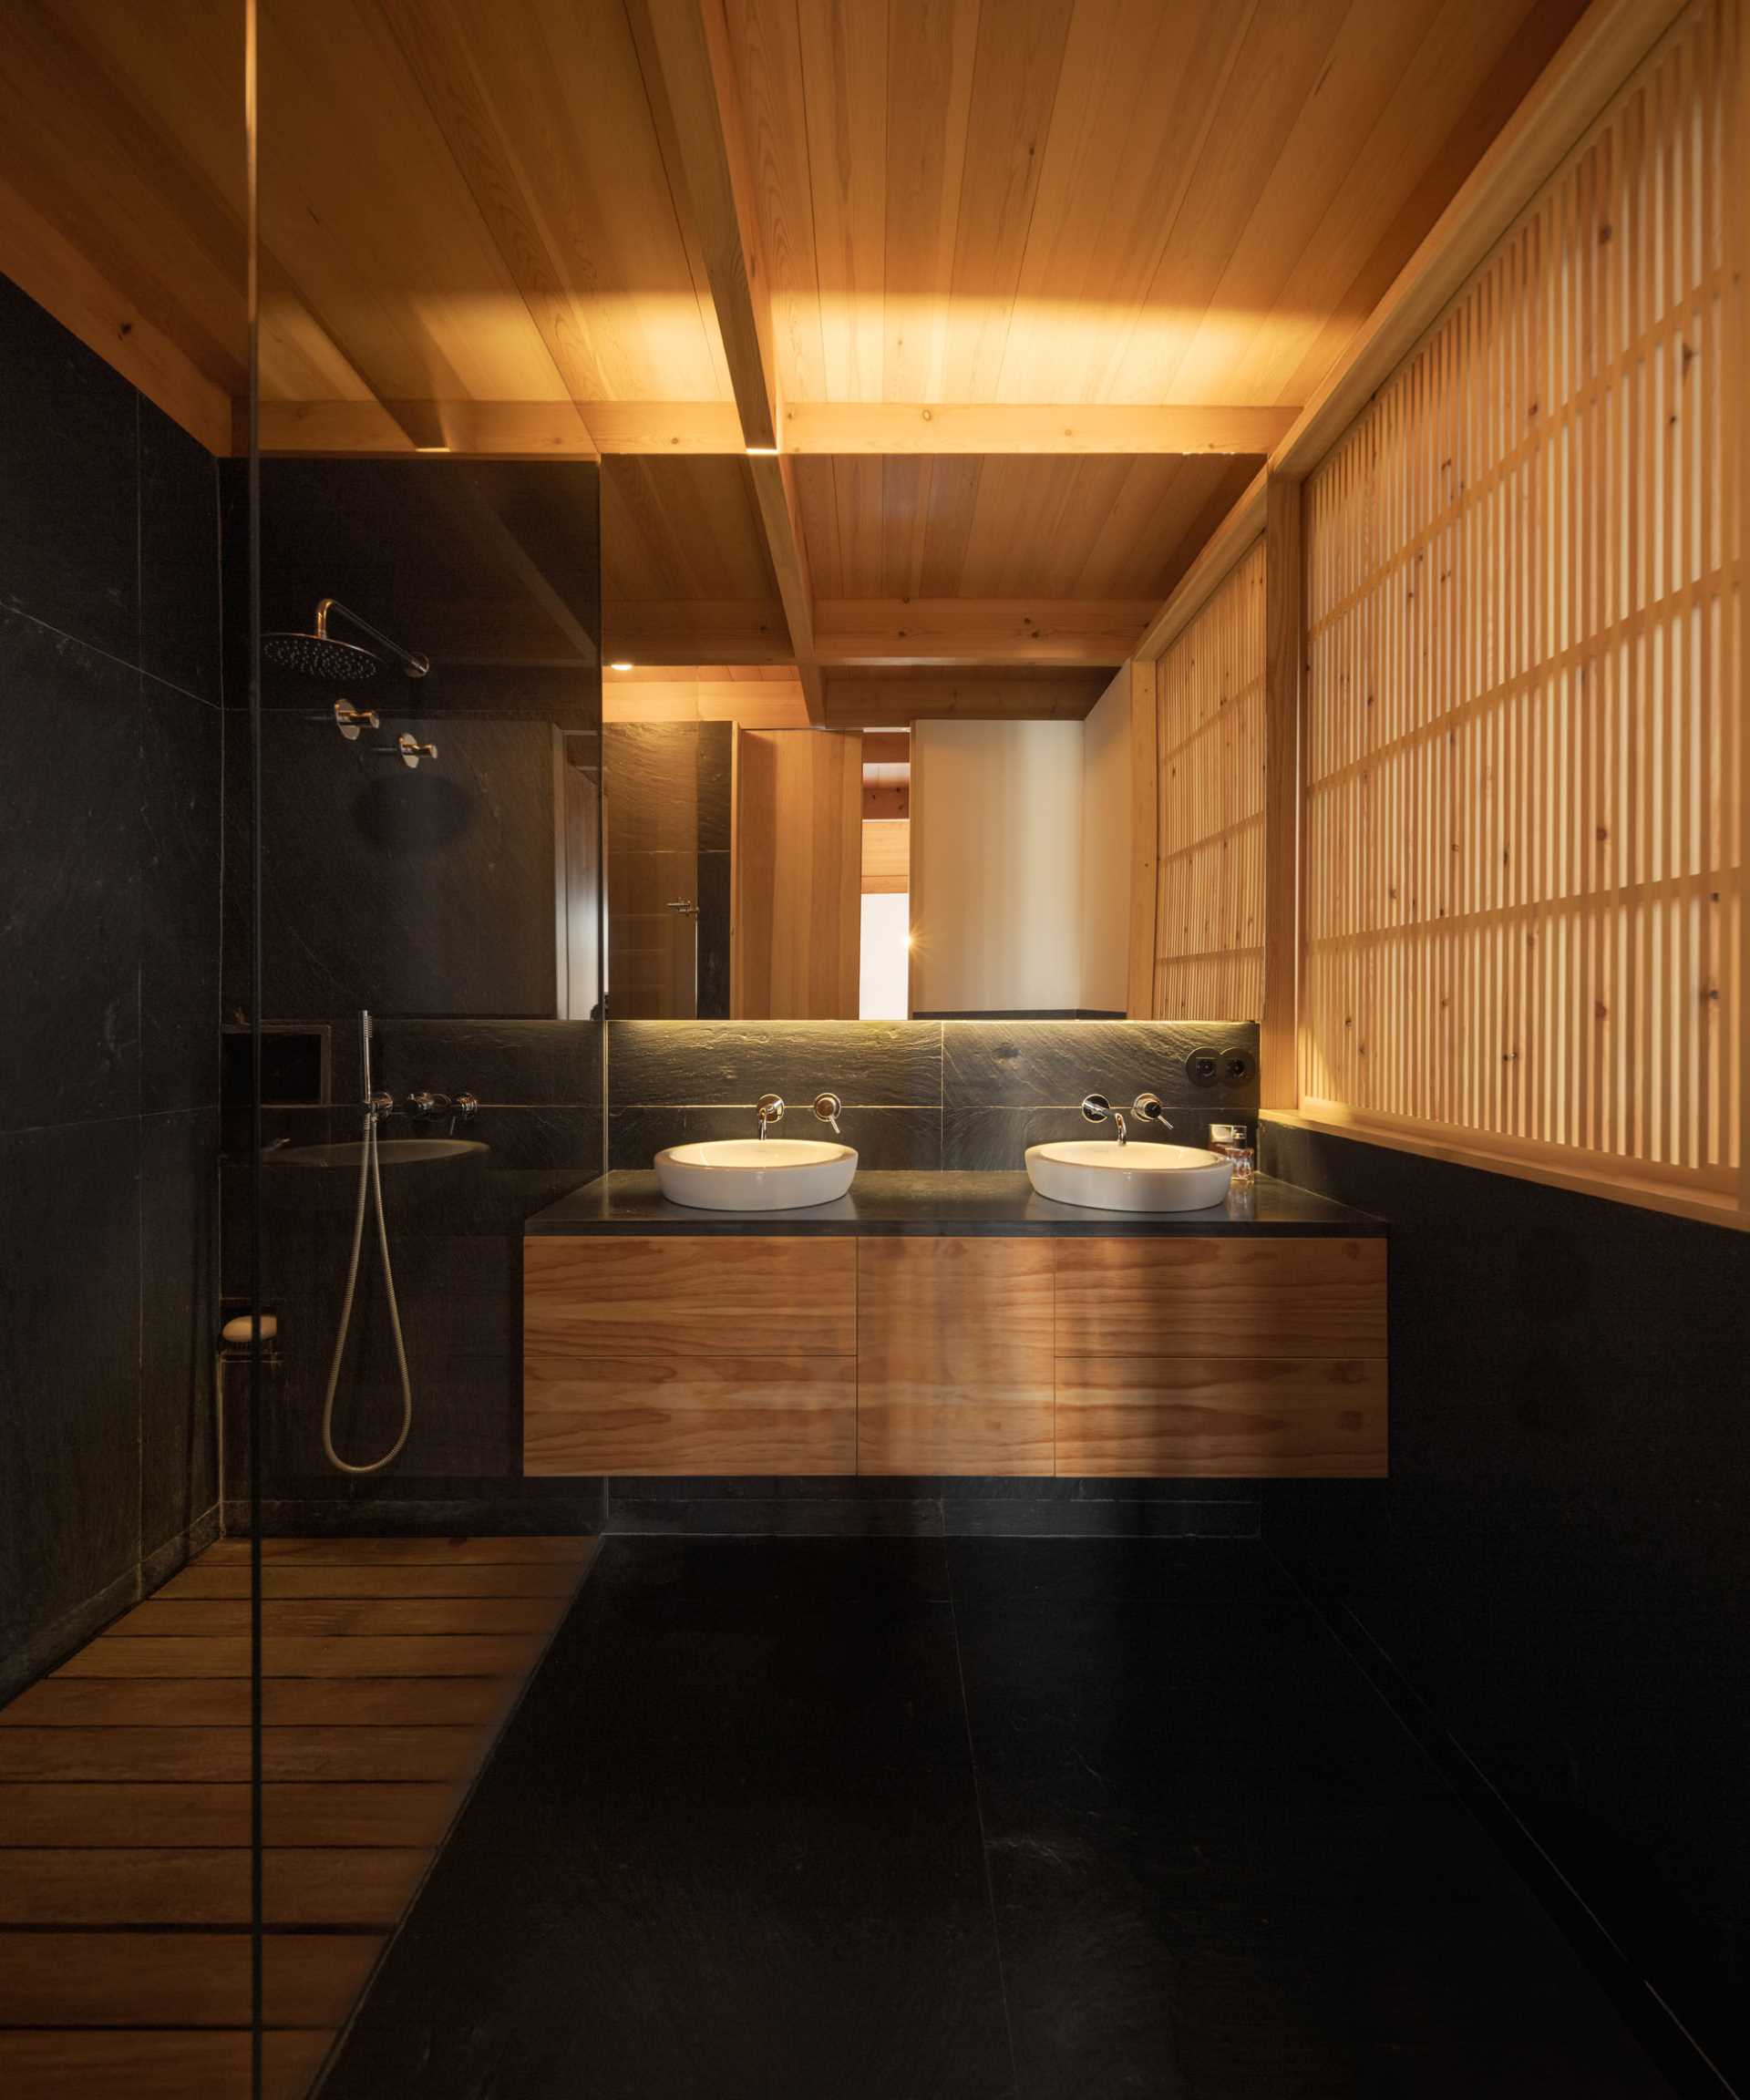 A modern bathroom with wood, dark stone, and hidden lighting.